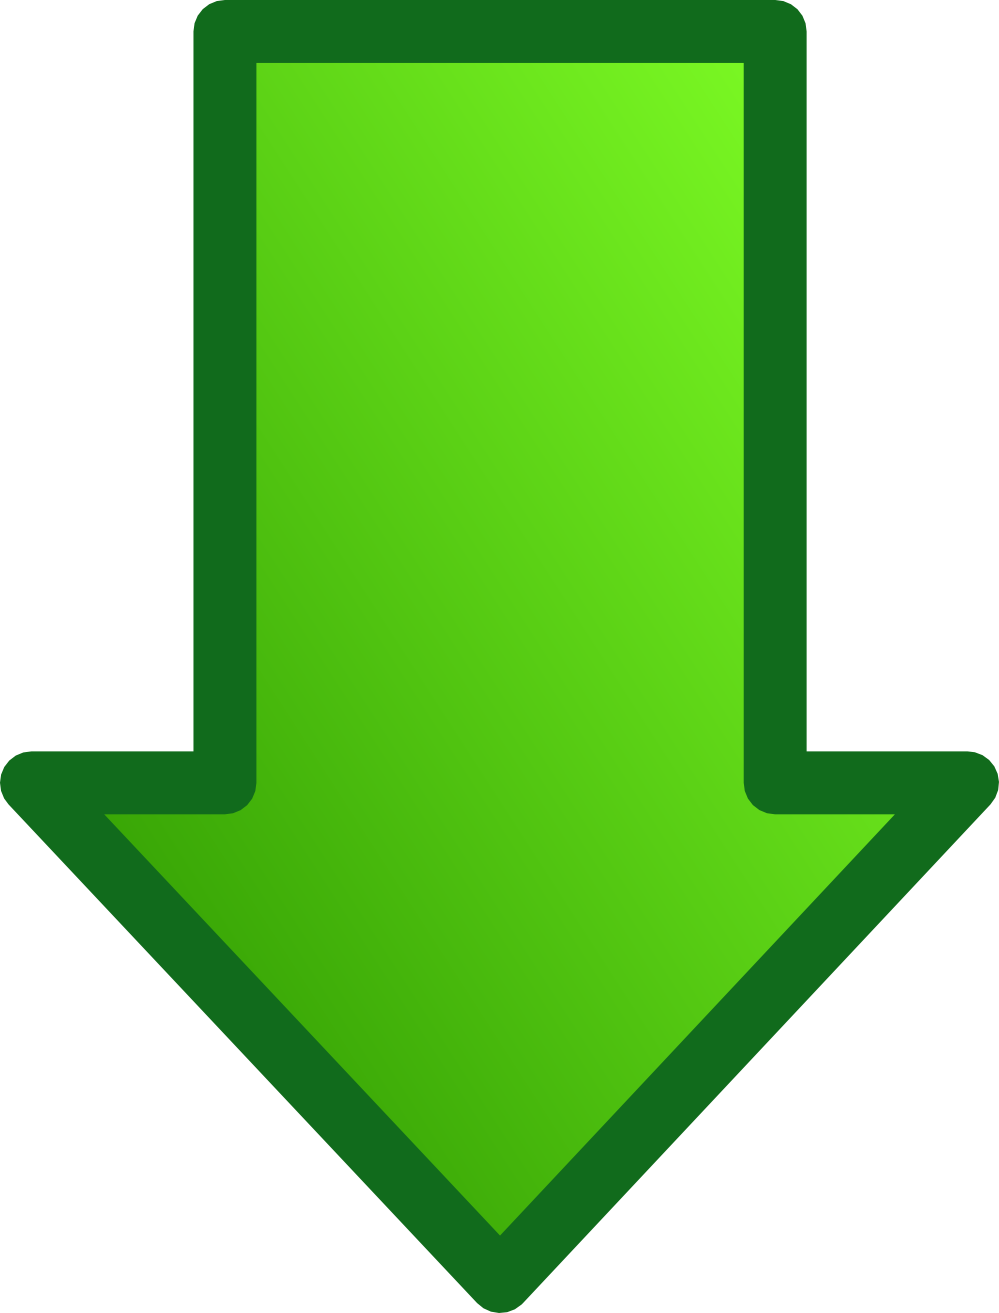 A Green Arrow - Clipart library